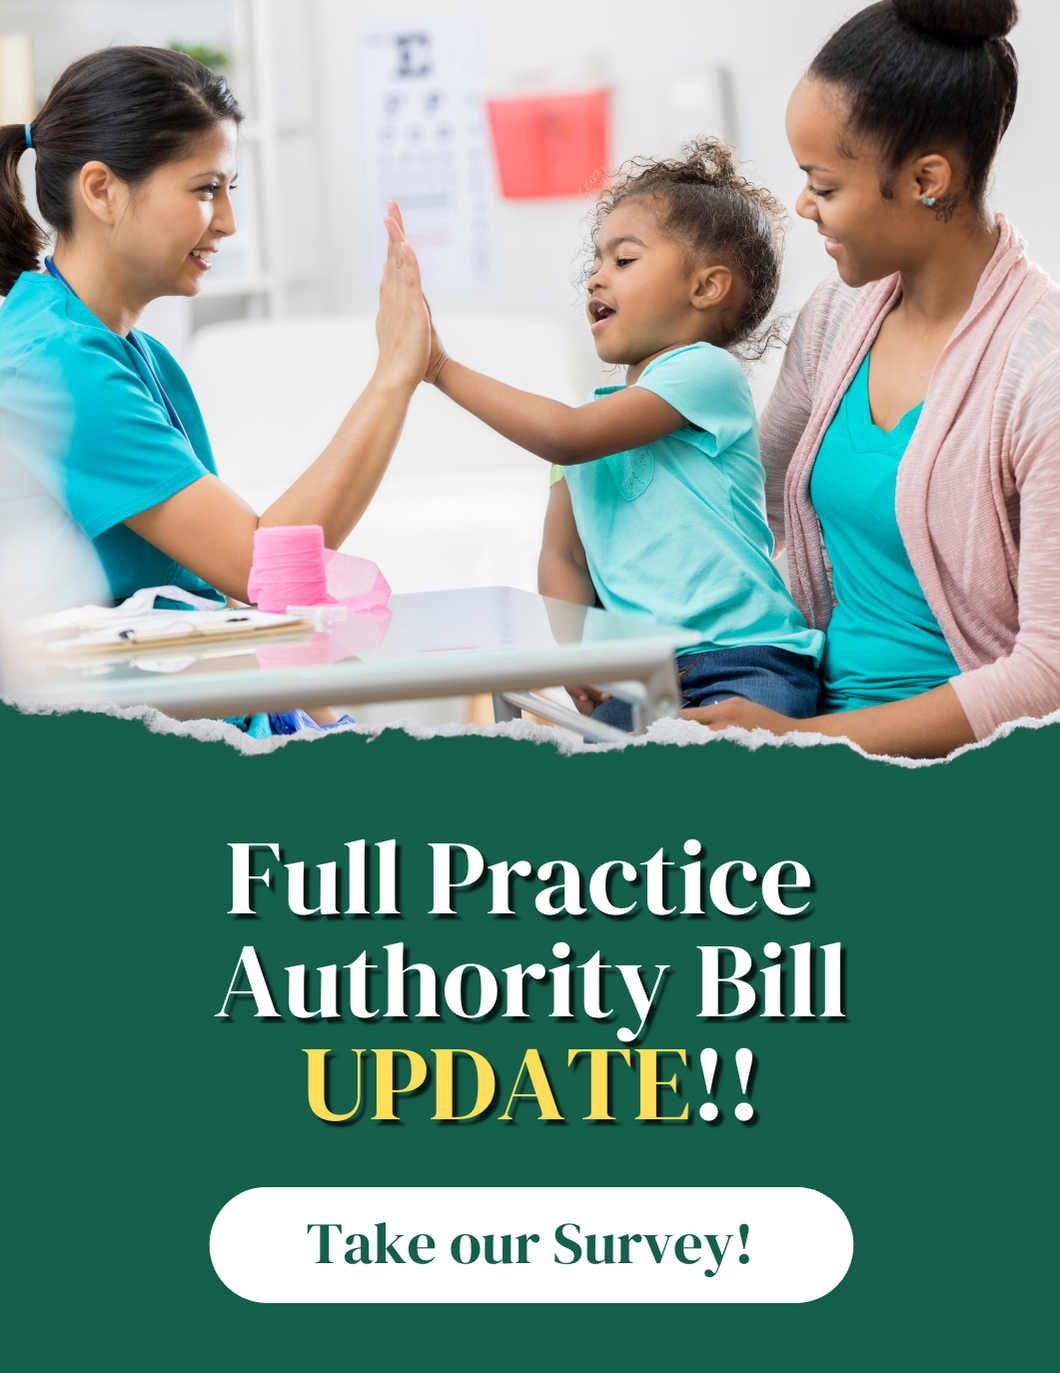 Full practice authority bill update